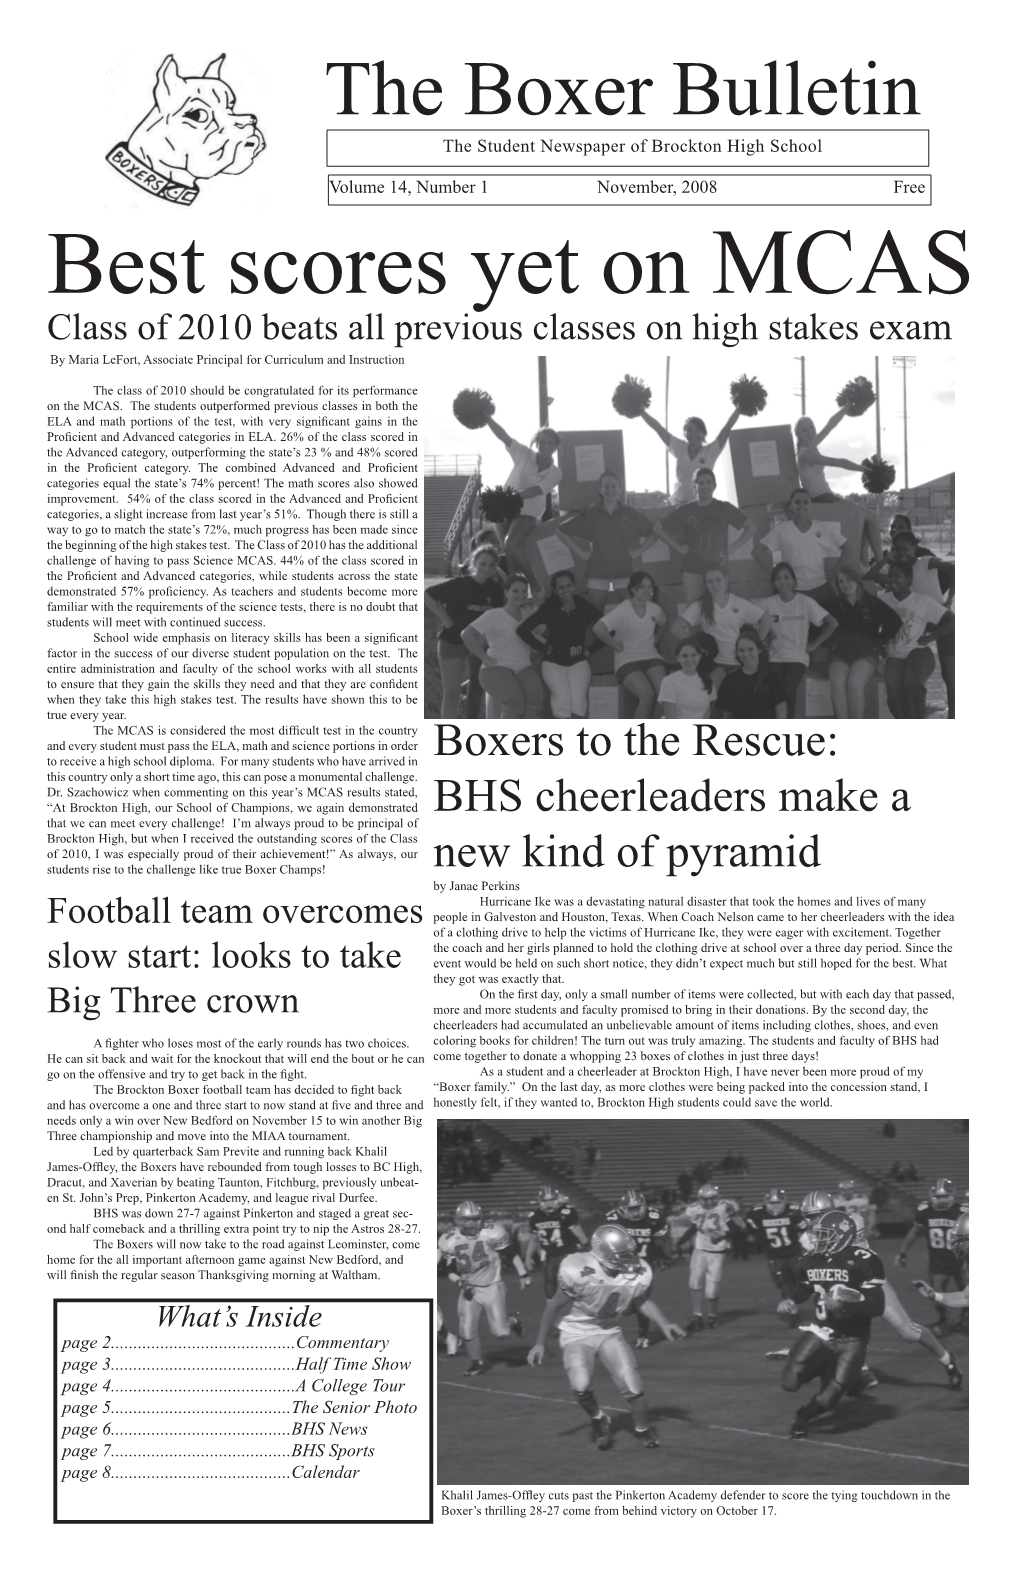 The Boxer Bulletin the Student Newspaper of Brockton High School